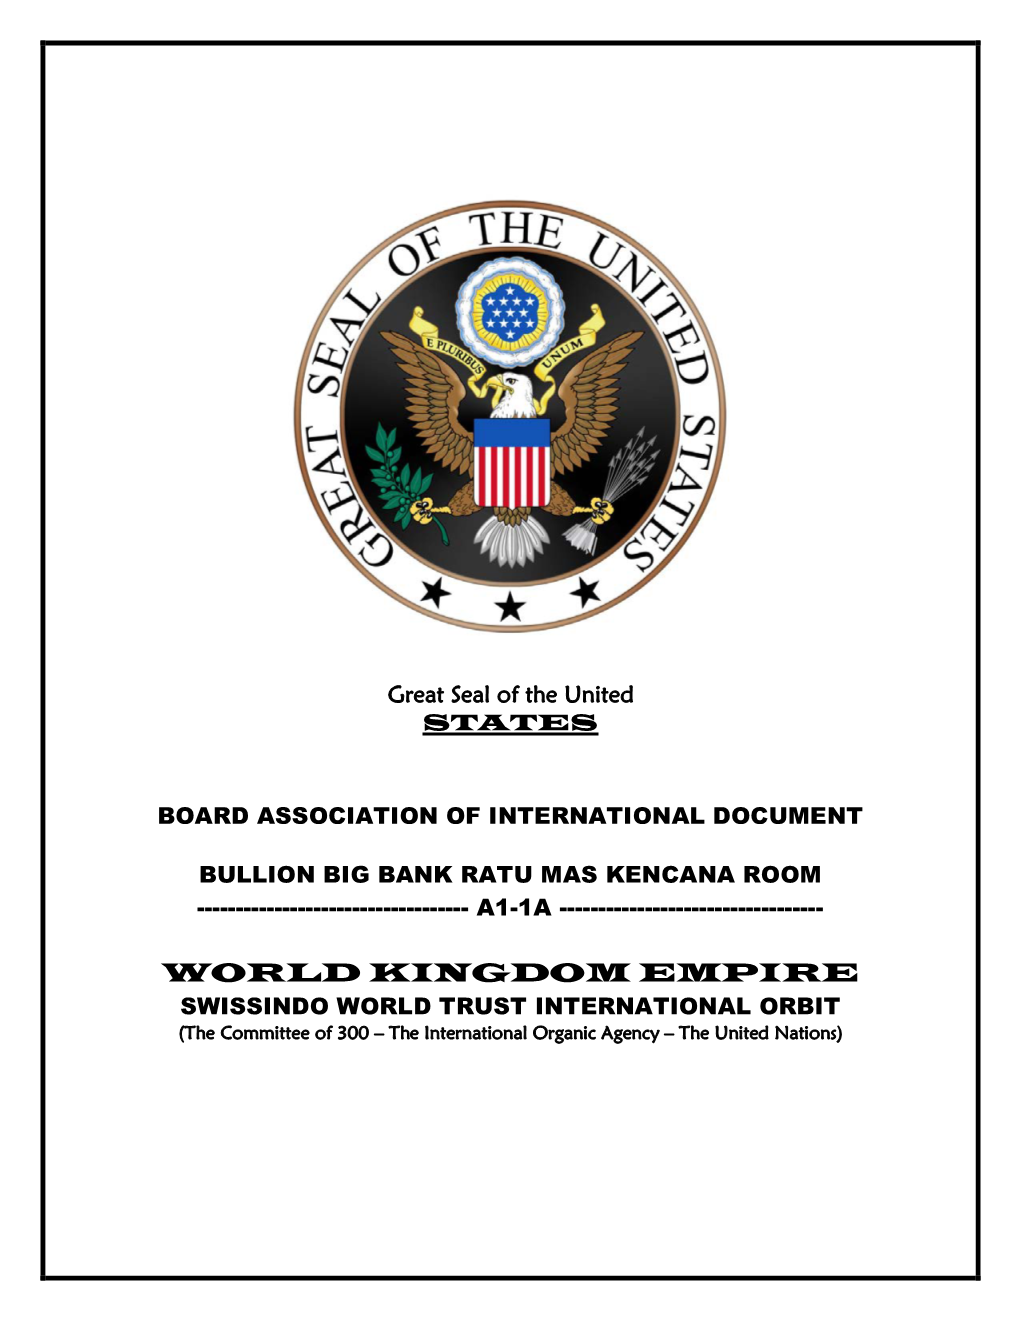 WORLD KINGDOM EMPIRE SWISSINDO WORLD TRUST INTERNATIONAL ORBIT (The Committee of 300 – the International Organic Agency – the United Nations)